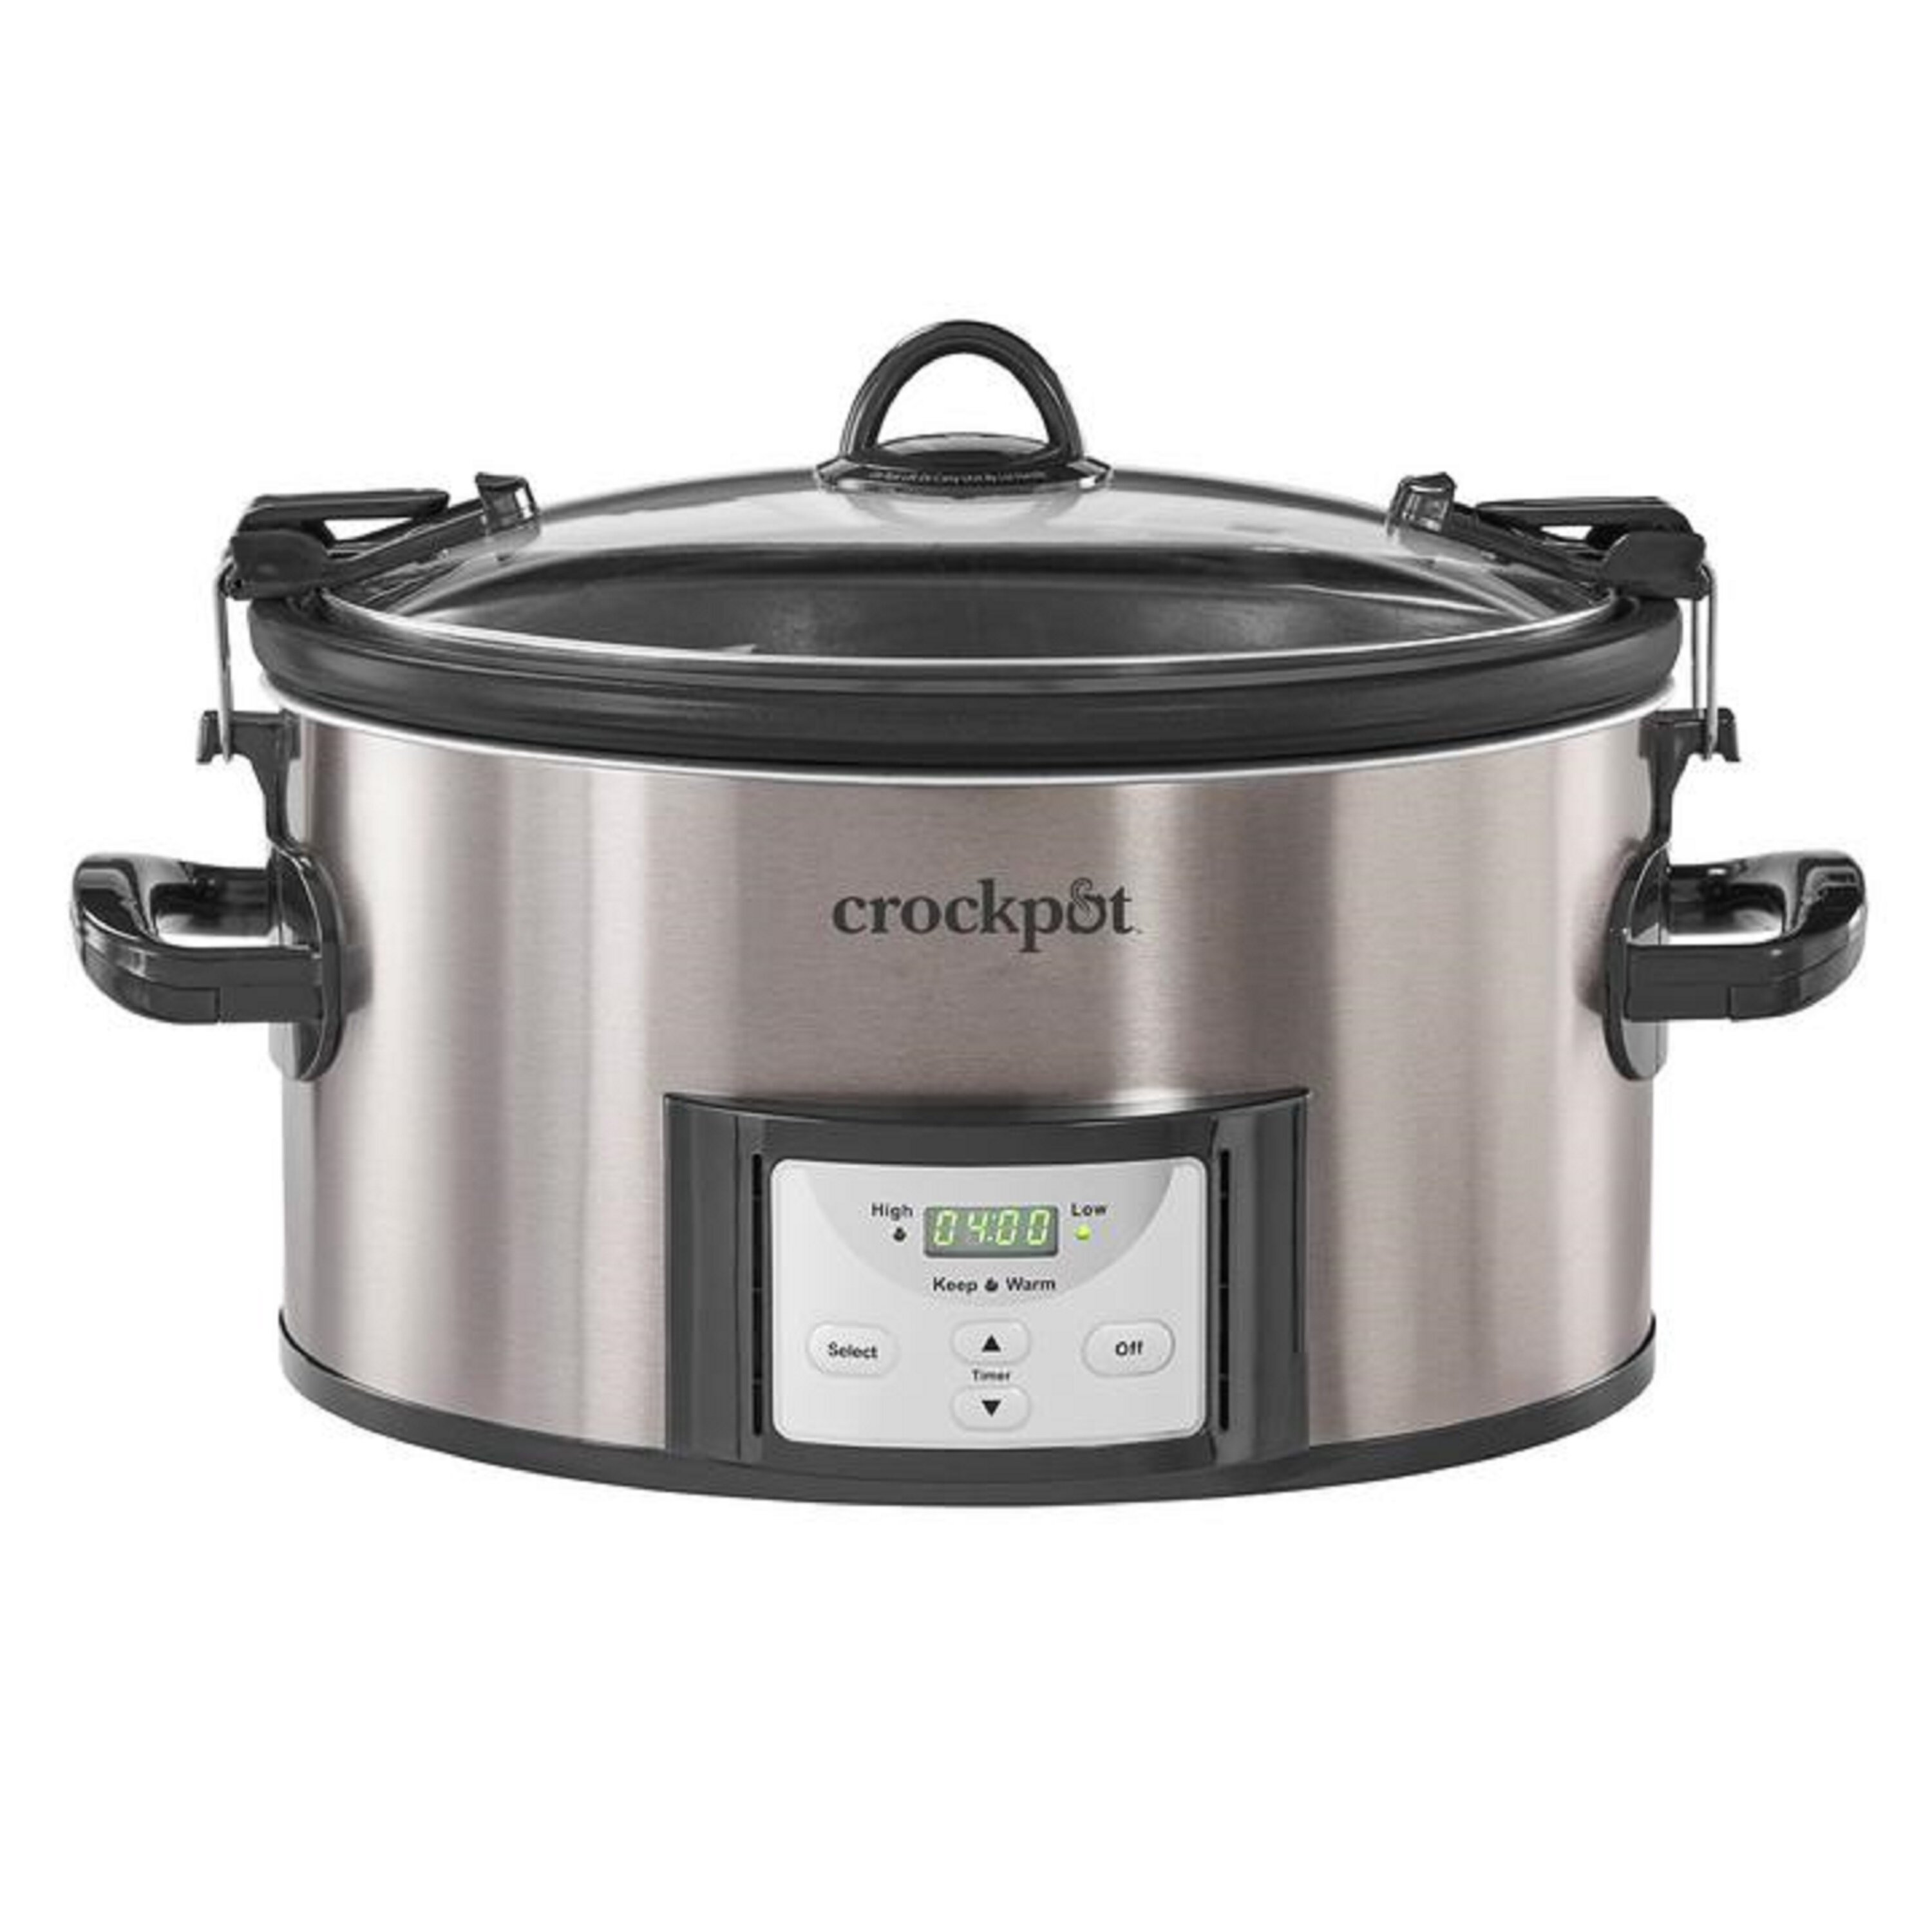 Crock-Pot Large 8 Quart Oval Manual Slow Cooker and Food Warmer